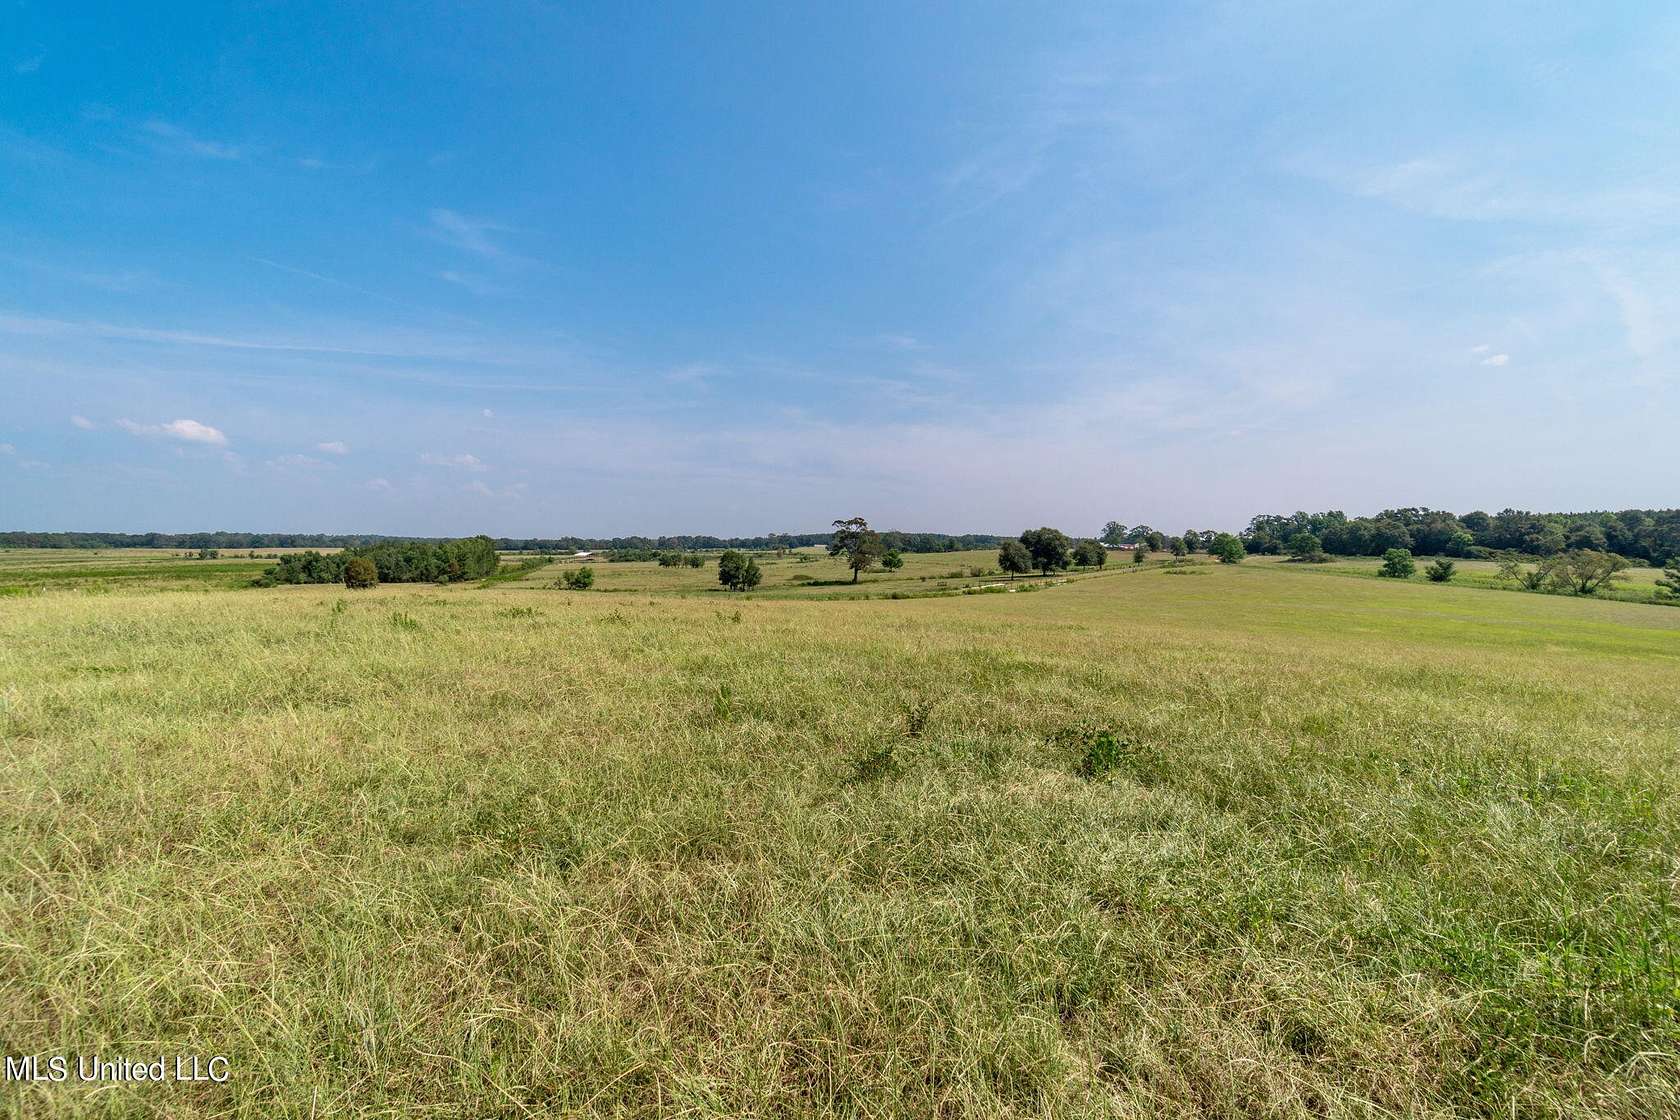 49 Acres of Land for Sale in Poplarville, Mississippi